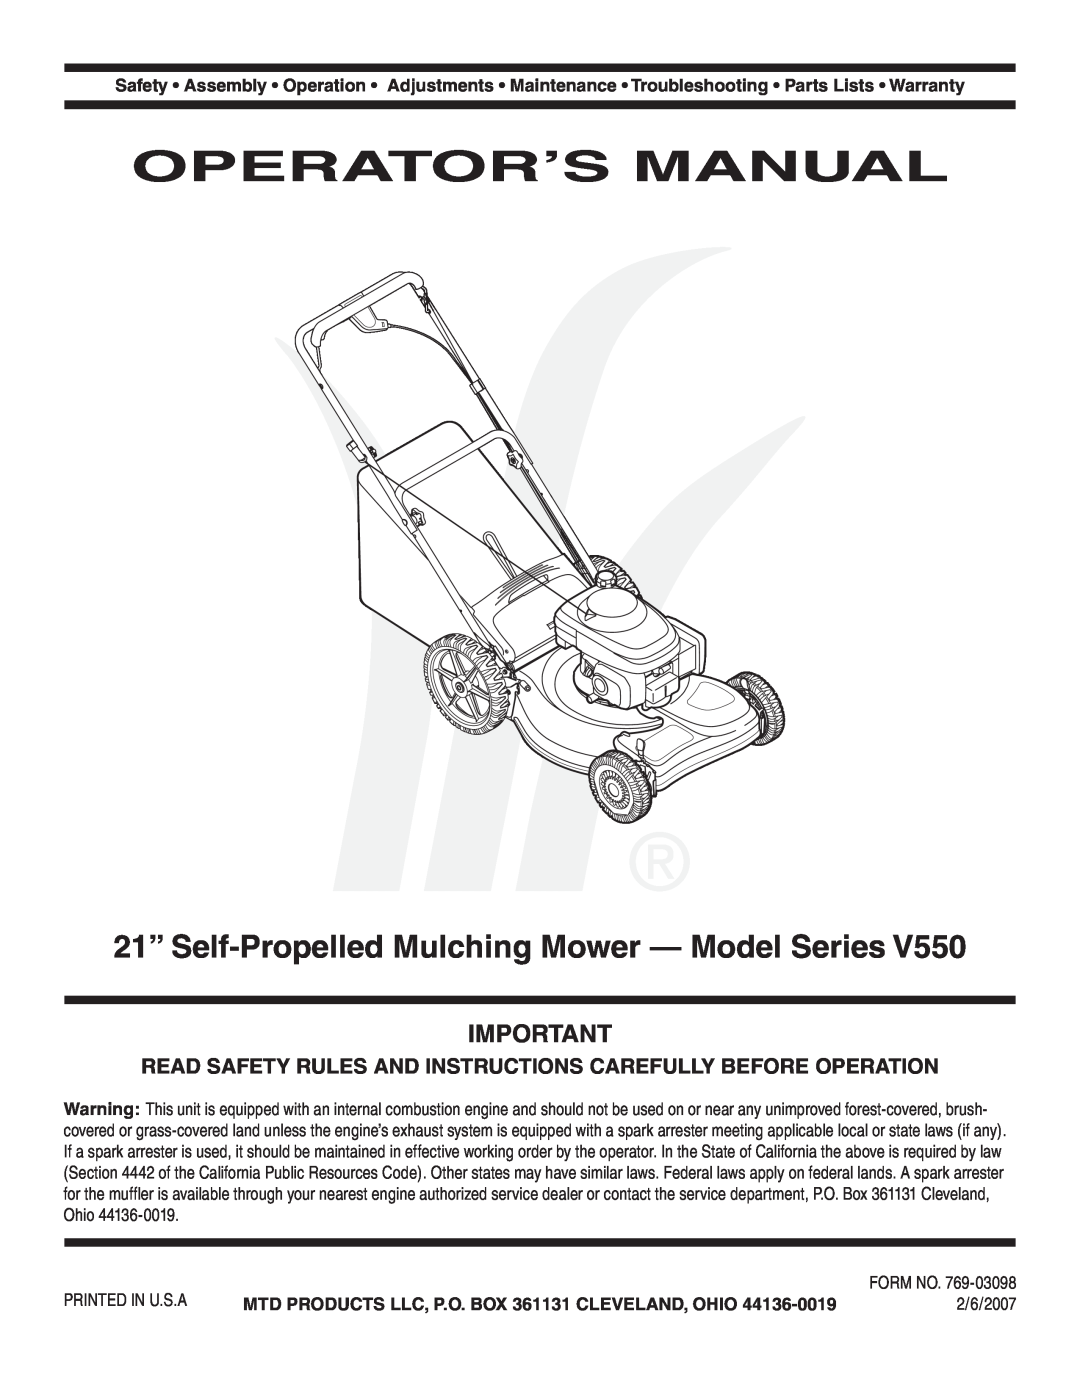 Honda Power Equipment V550 warranty Operator’S Manual, 21” Self-Propelled Mulching Mower - Model Series 